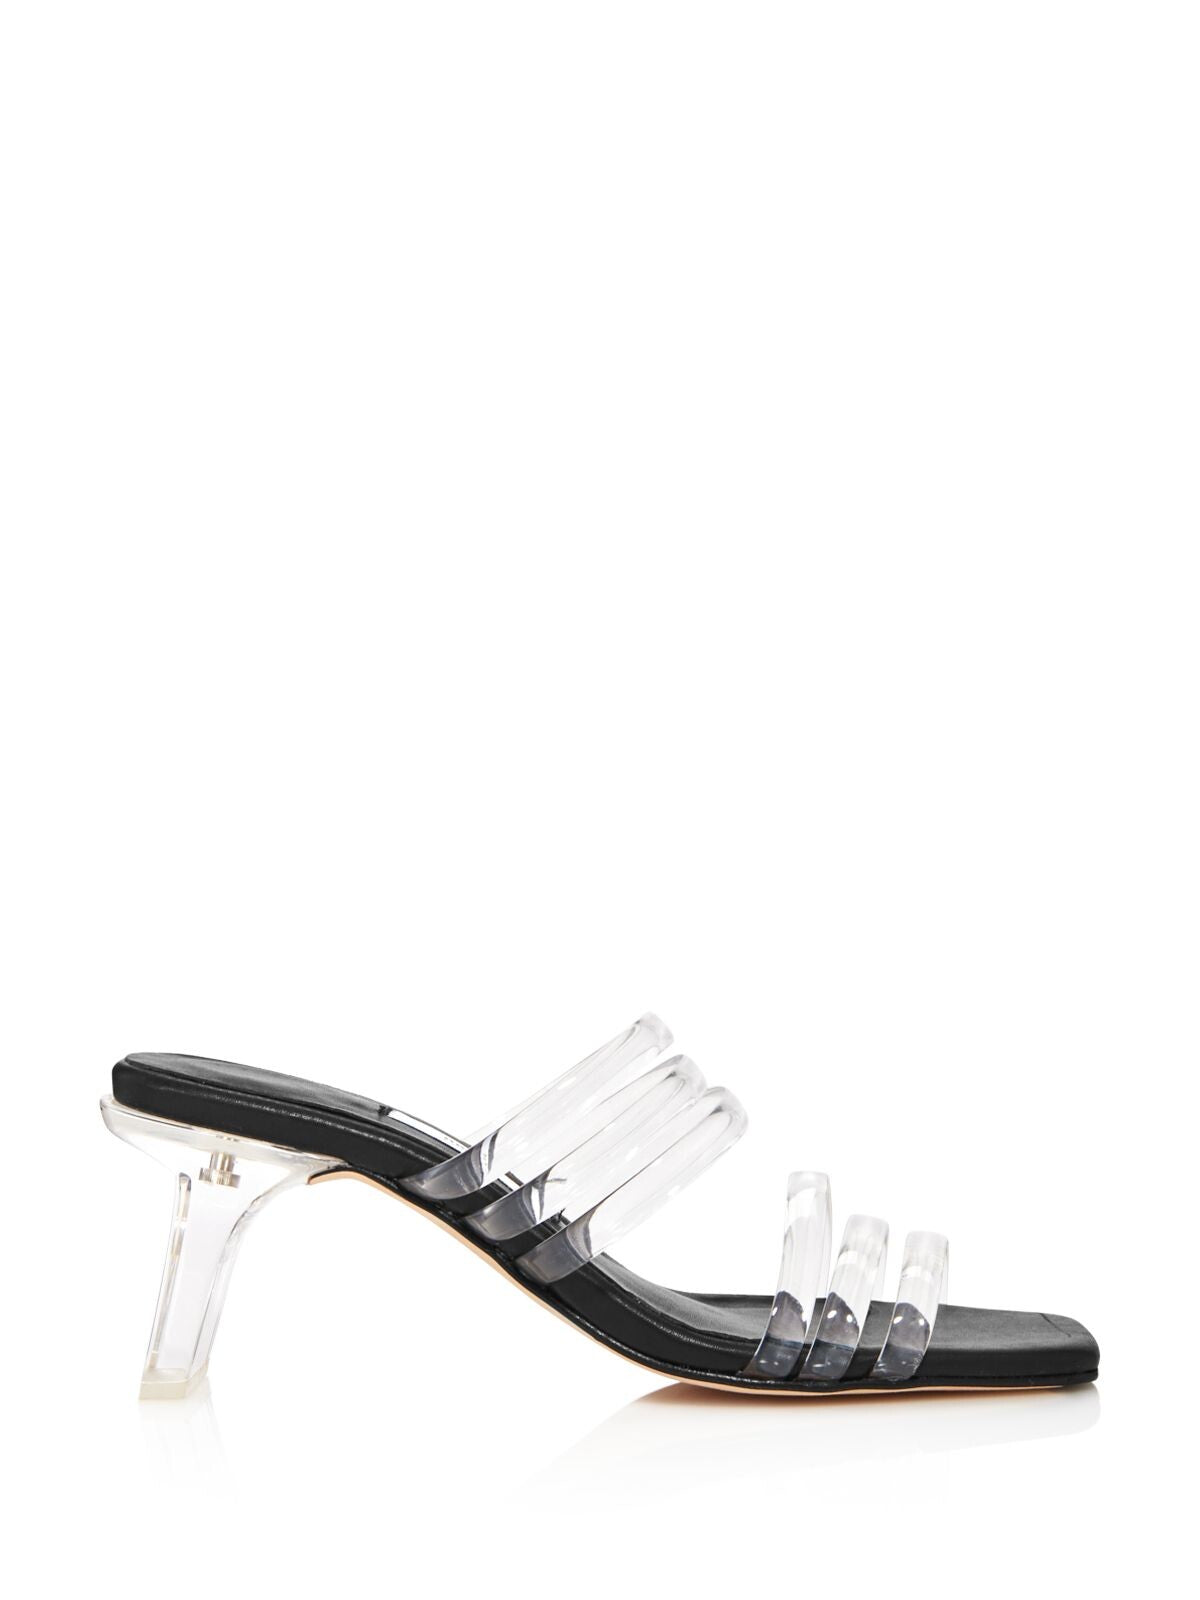 MISTA Womens Black Strappy Comfort Helena Square Toe Block Heel Slip On Leather Slide Sandals Shoes 37